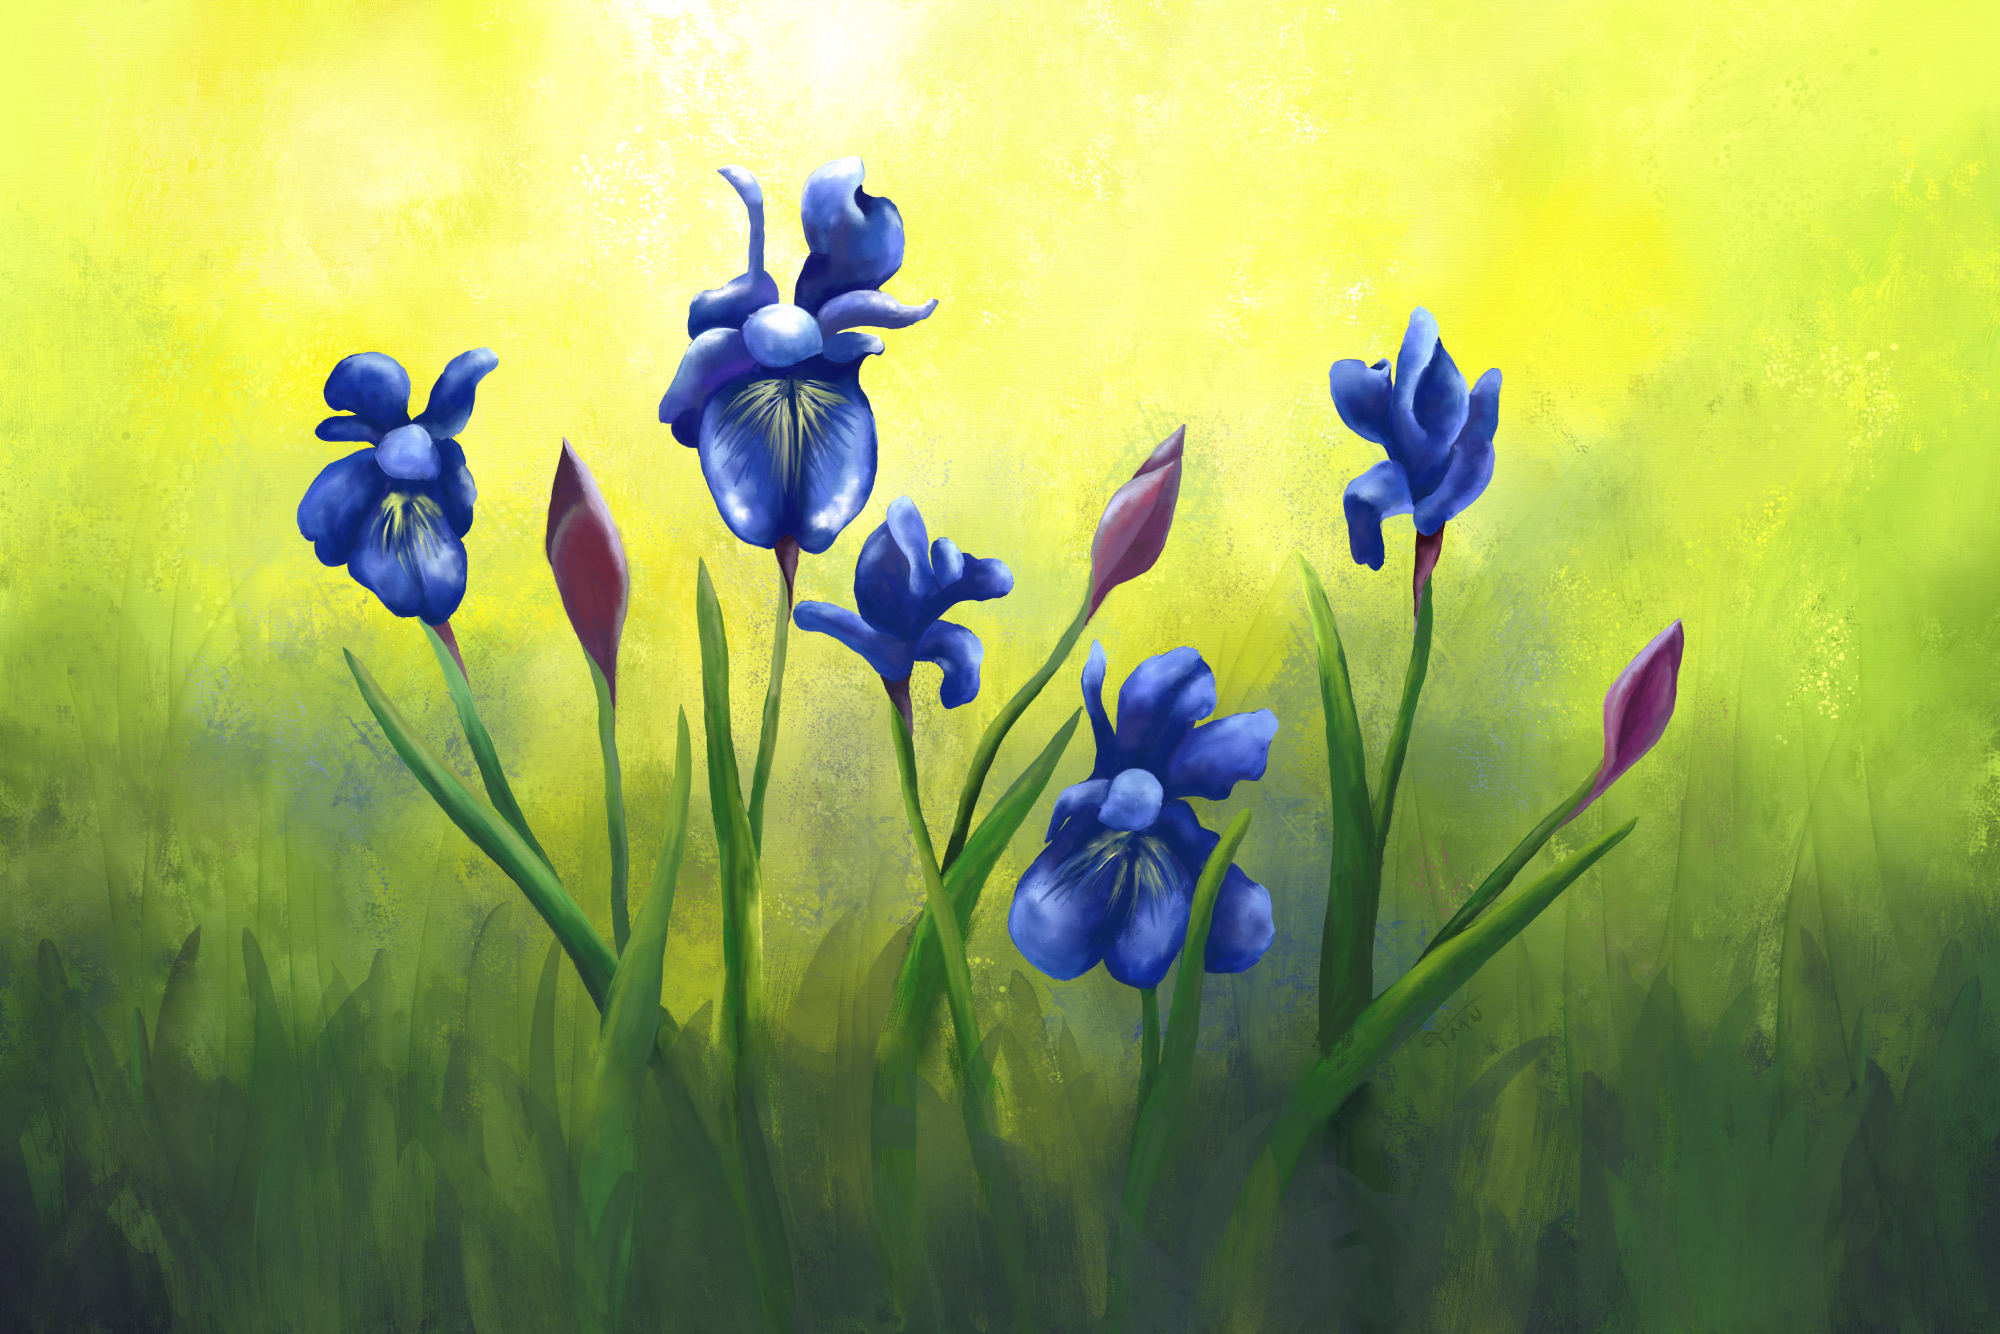 Digital acrylic painting of blue iris flowers